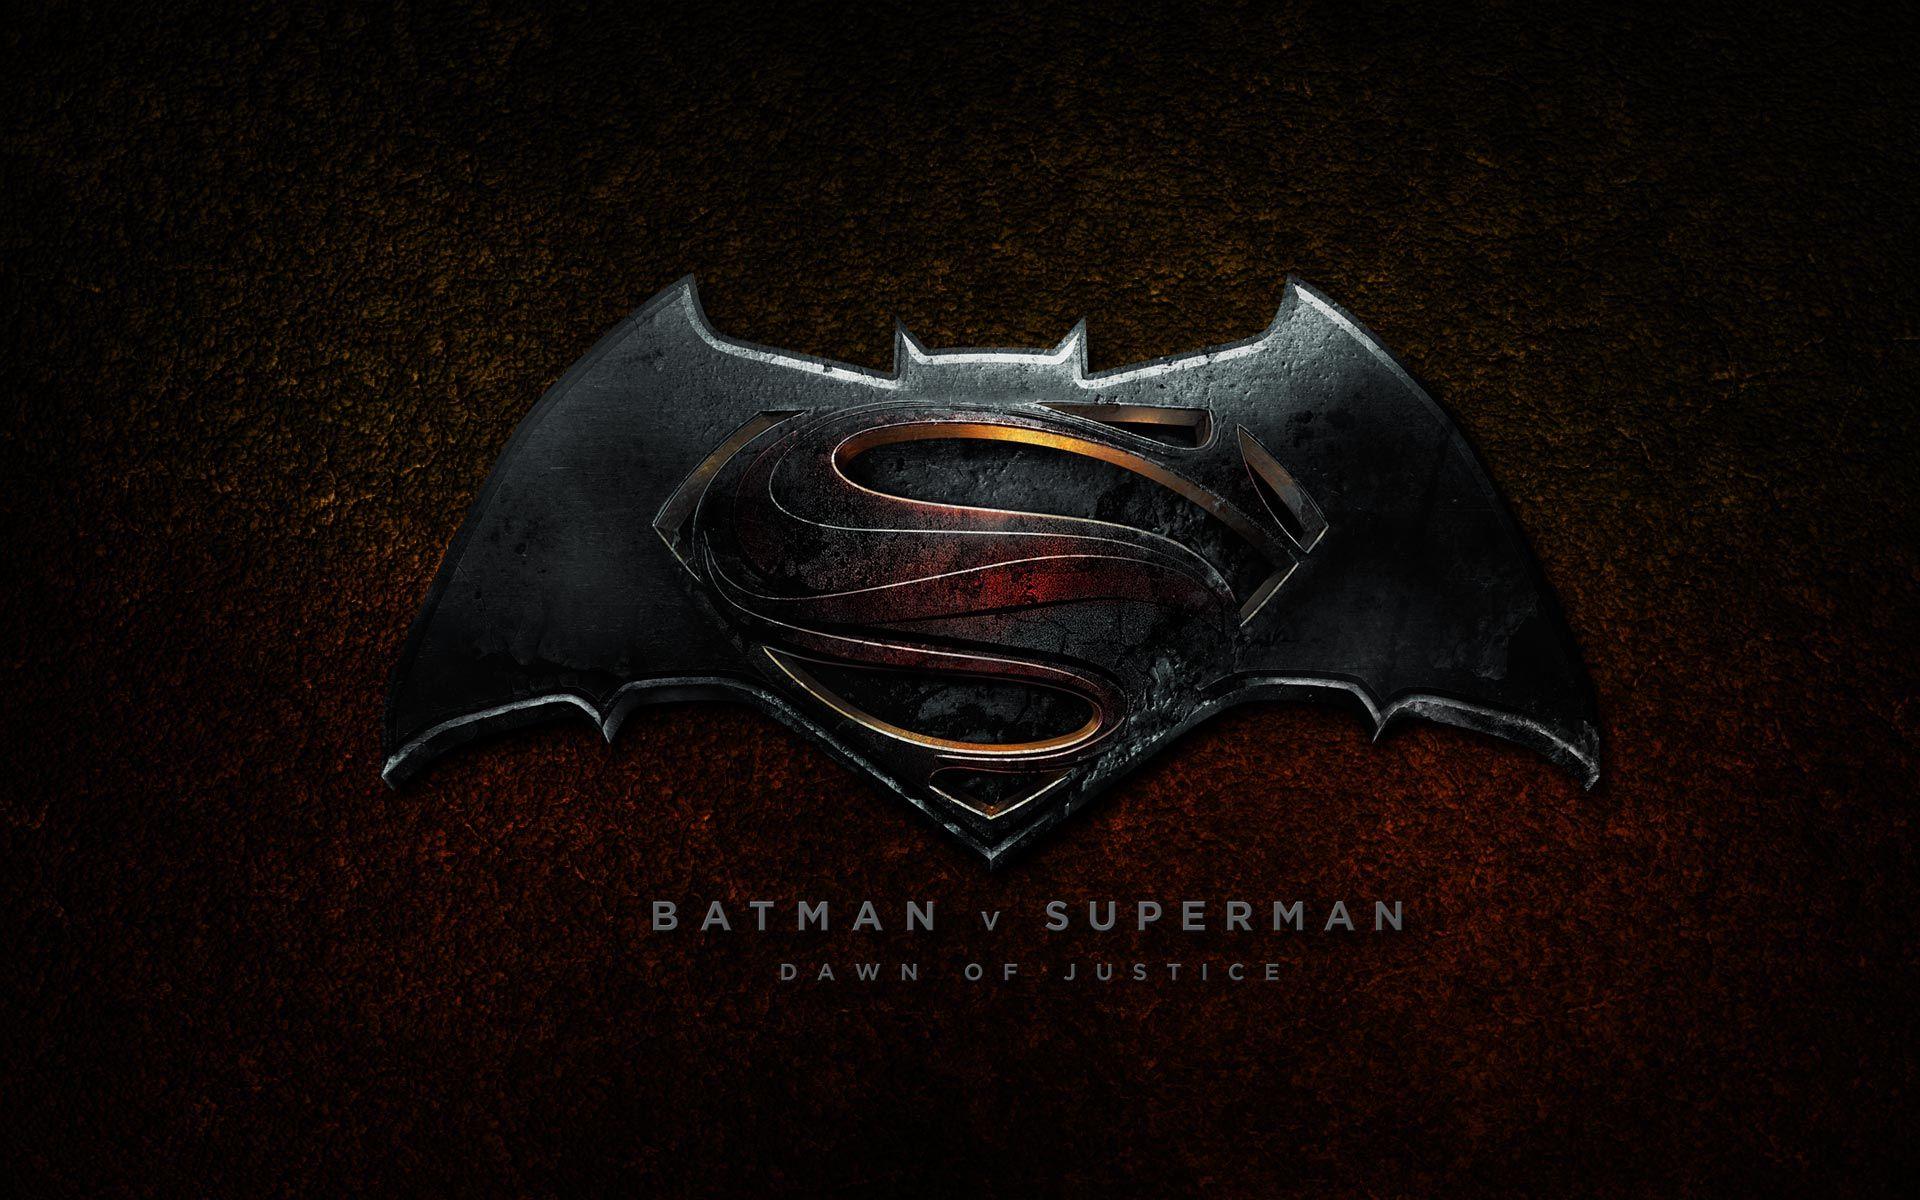 Batman vs Superman Movie Logo - 11 Best HD Wallpapers of Batman v Superman Movie